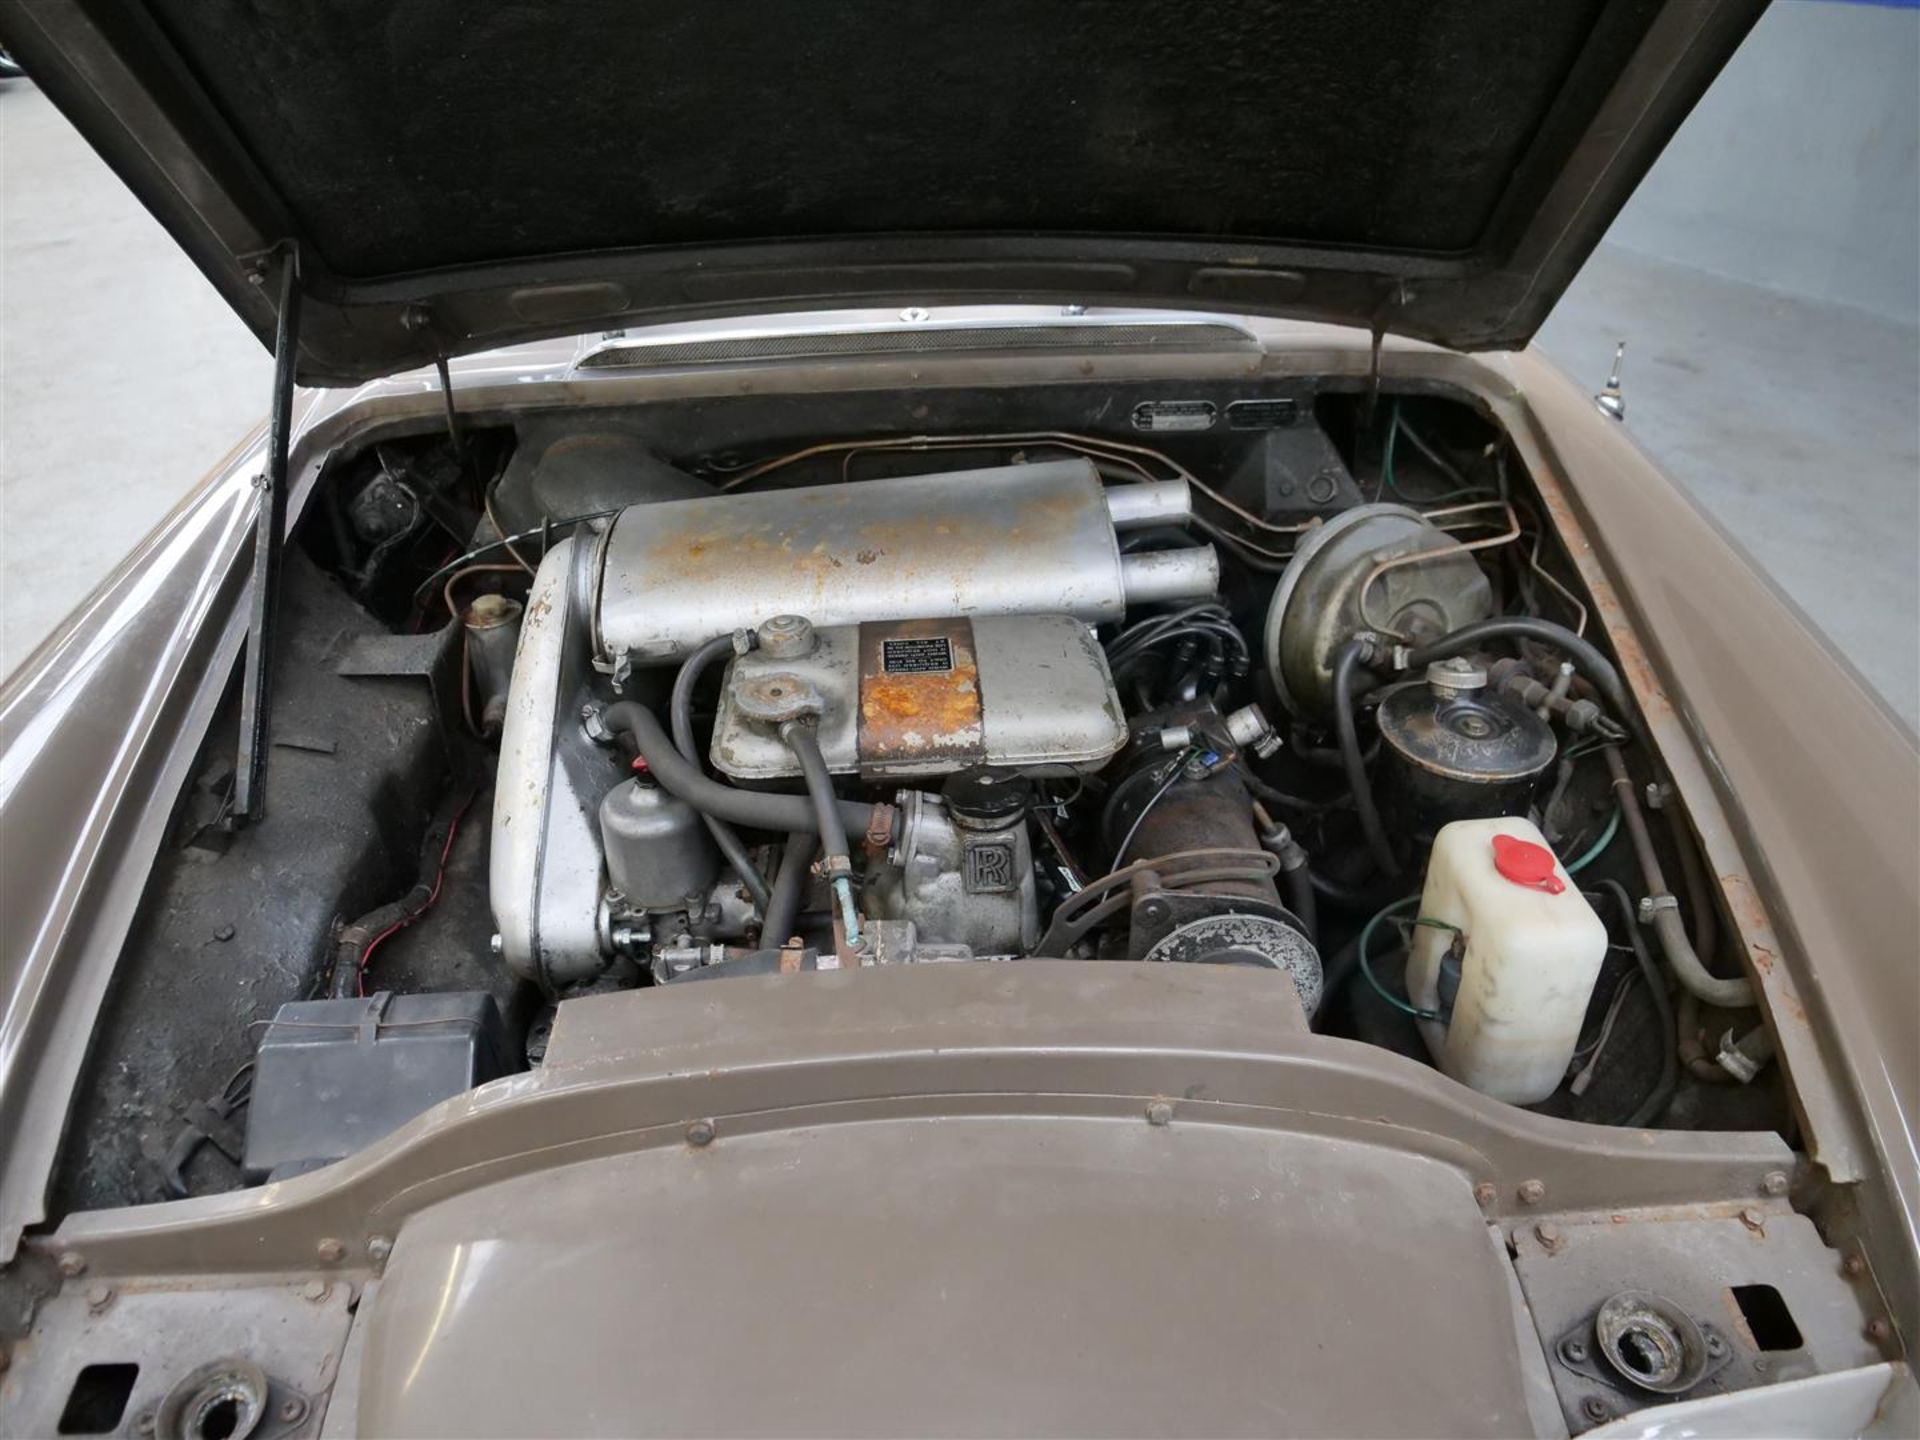 1966 Vanden Plas Princess 4 litre R Auto - Image 17 of 44